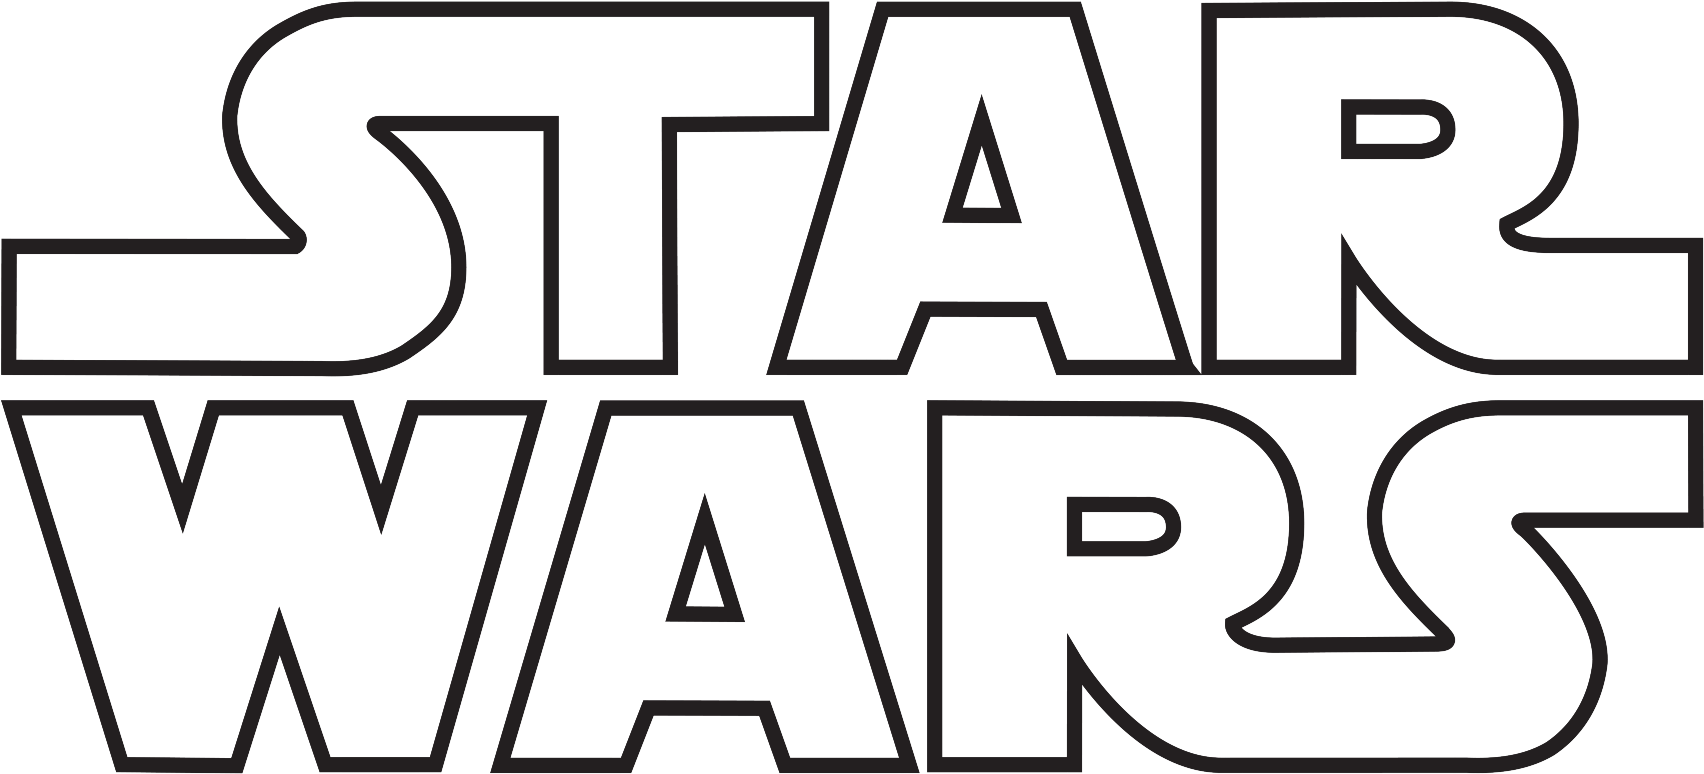 Star Wars Logo Black And White